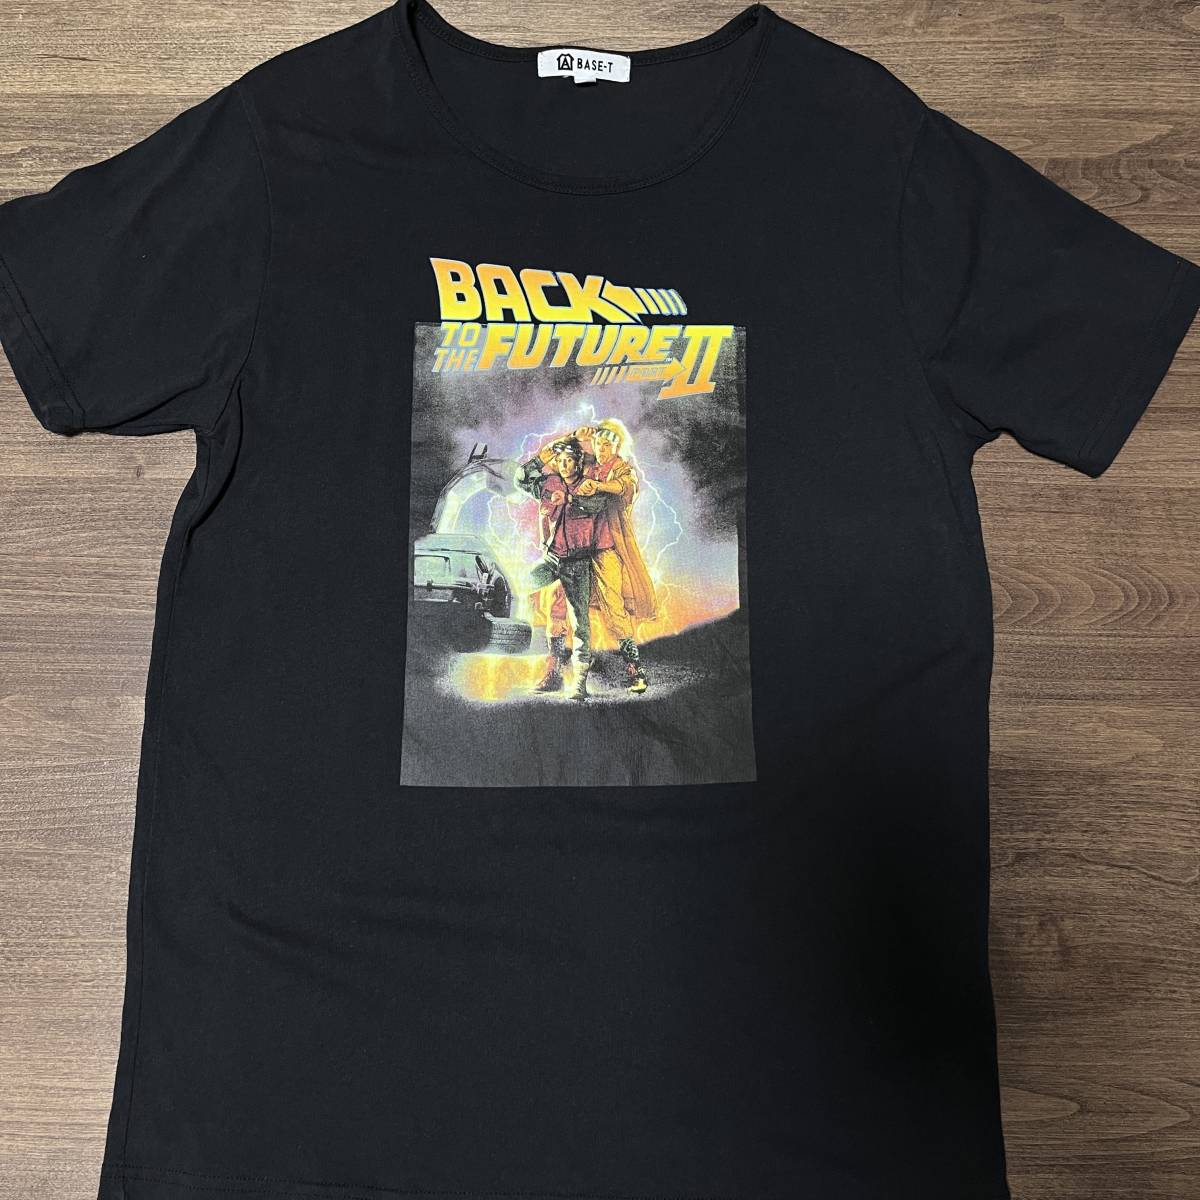 (BASE-T) バック・トゥ・ザ・フューチャー PART2 Tシャツの画像1